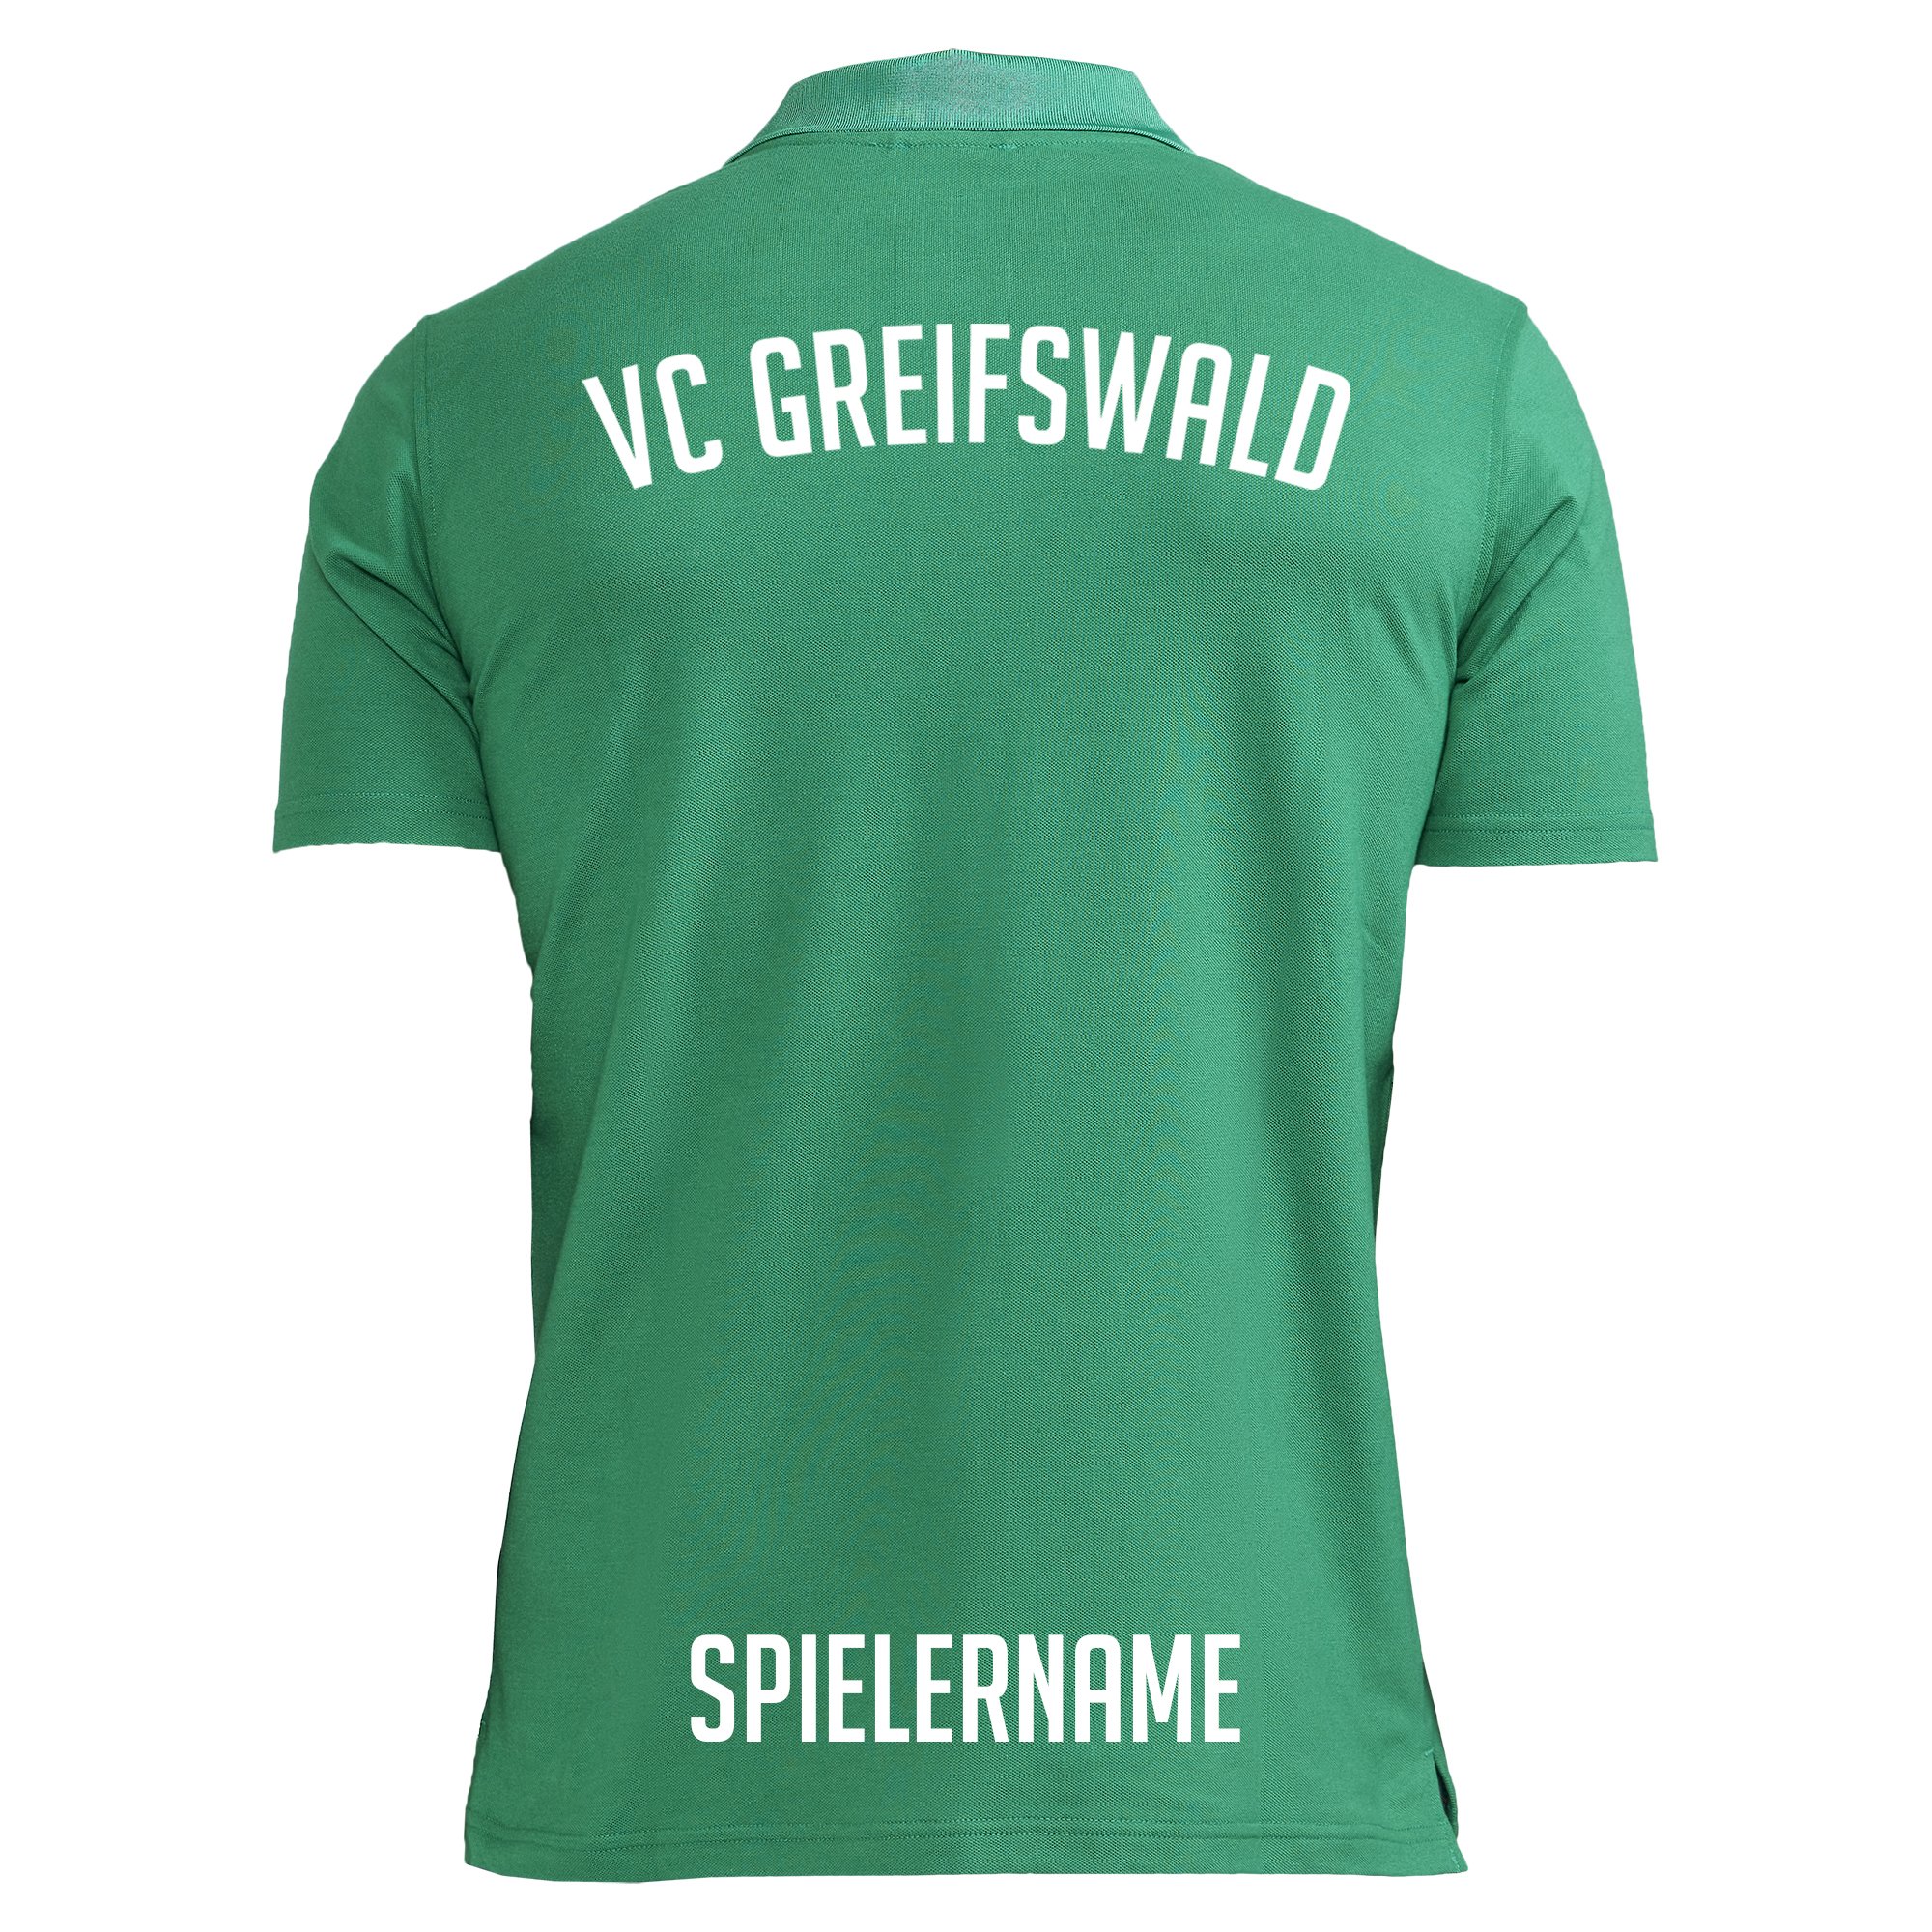 VC Greifswald Polo